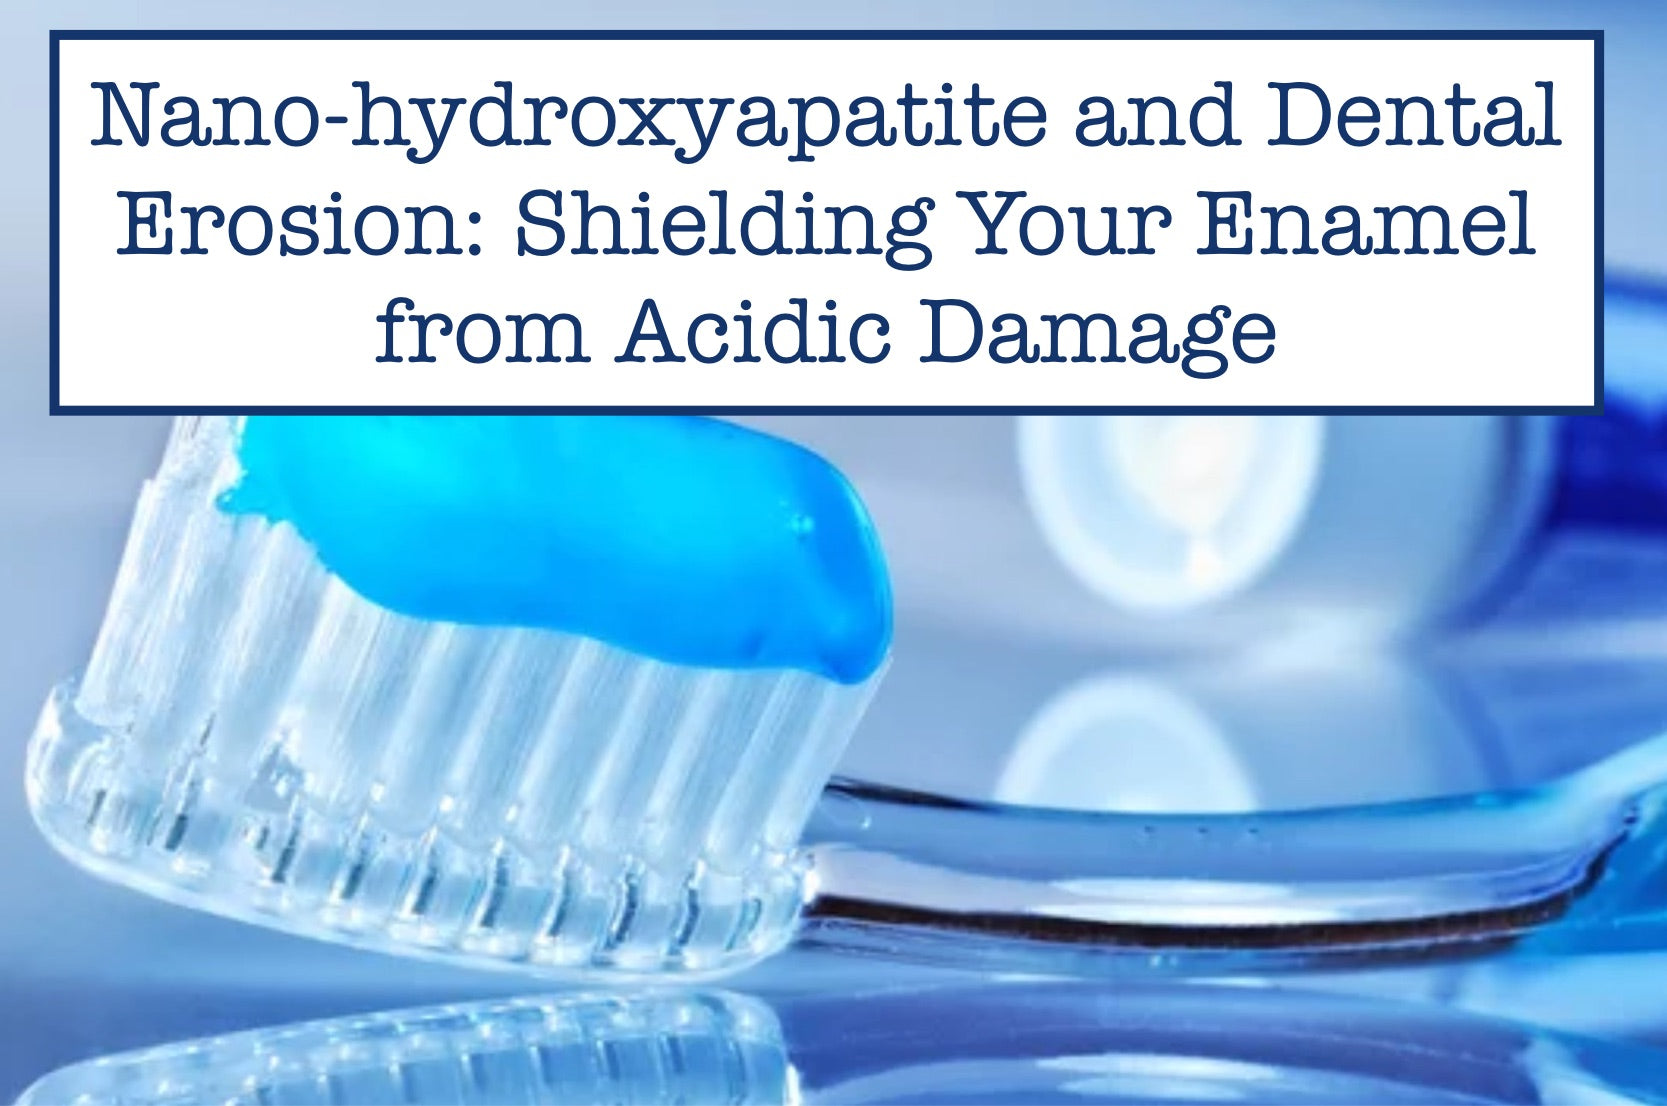 Nano-hydroxyapatite and Dental Erosion: Shielding Your Enamel from Acidic Damage